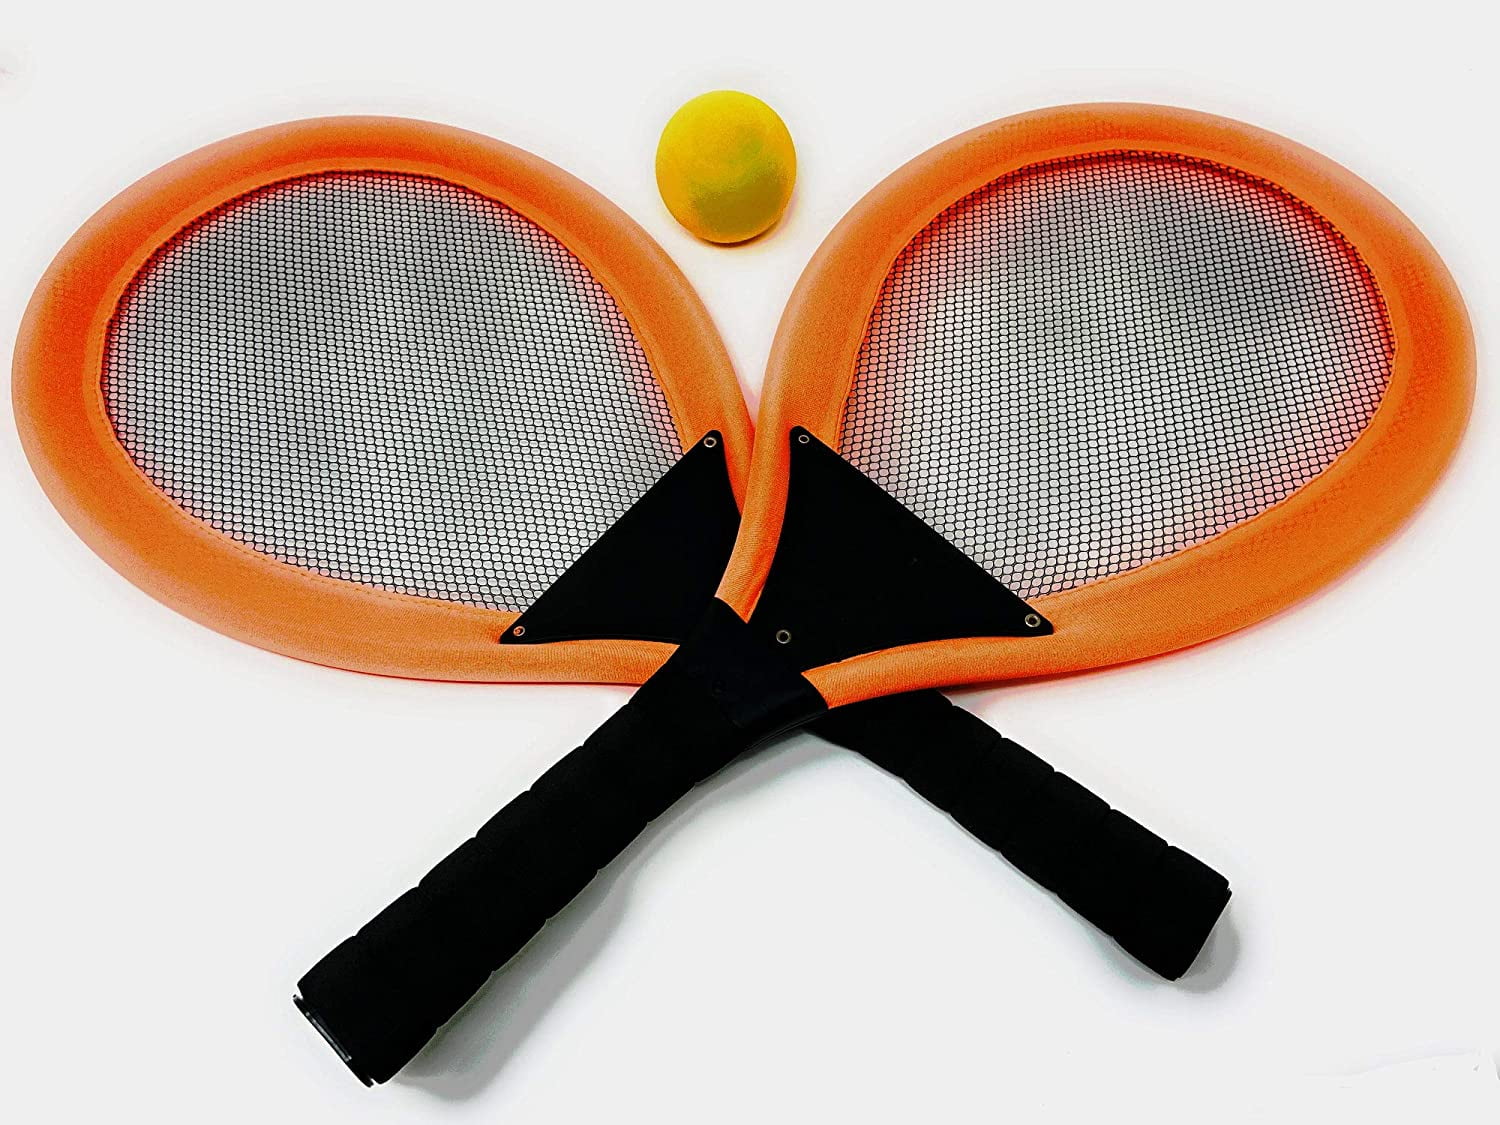 æ— Anti-Slip Portable Kids Badminton Racket Set with 2 Rackets Ball for Children 